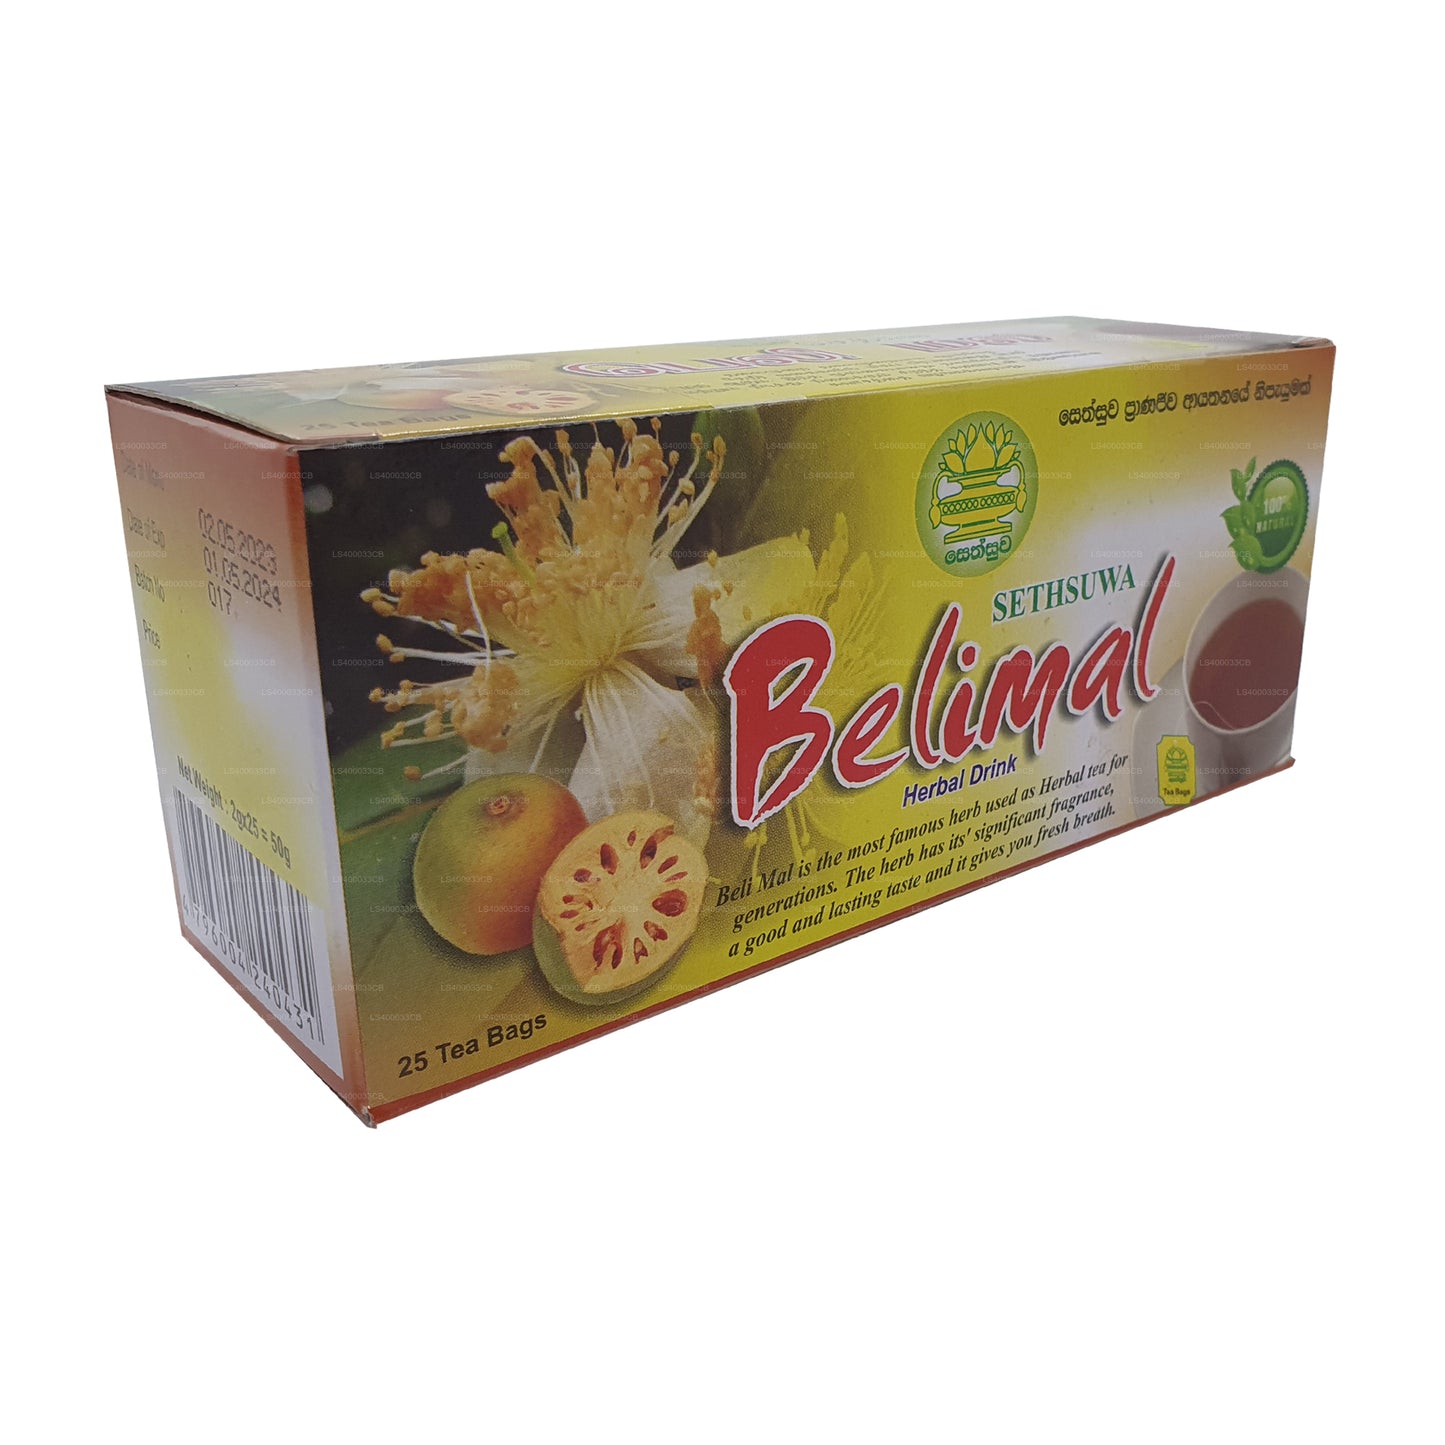 Белимальный чай Sethsuwa (50 г)